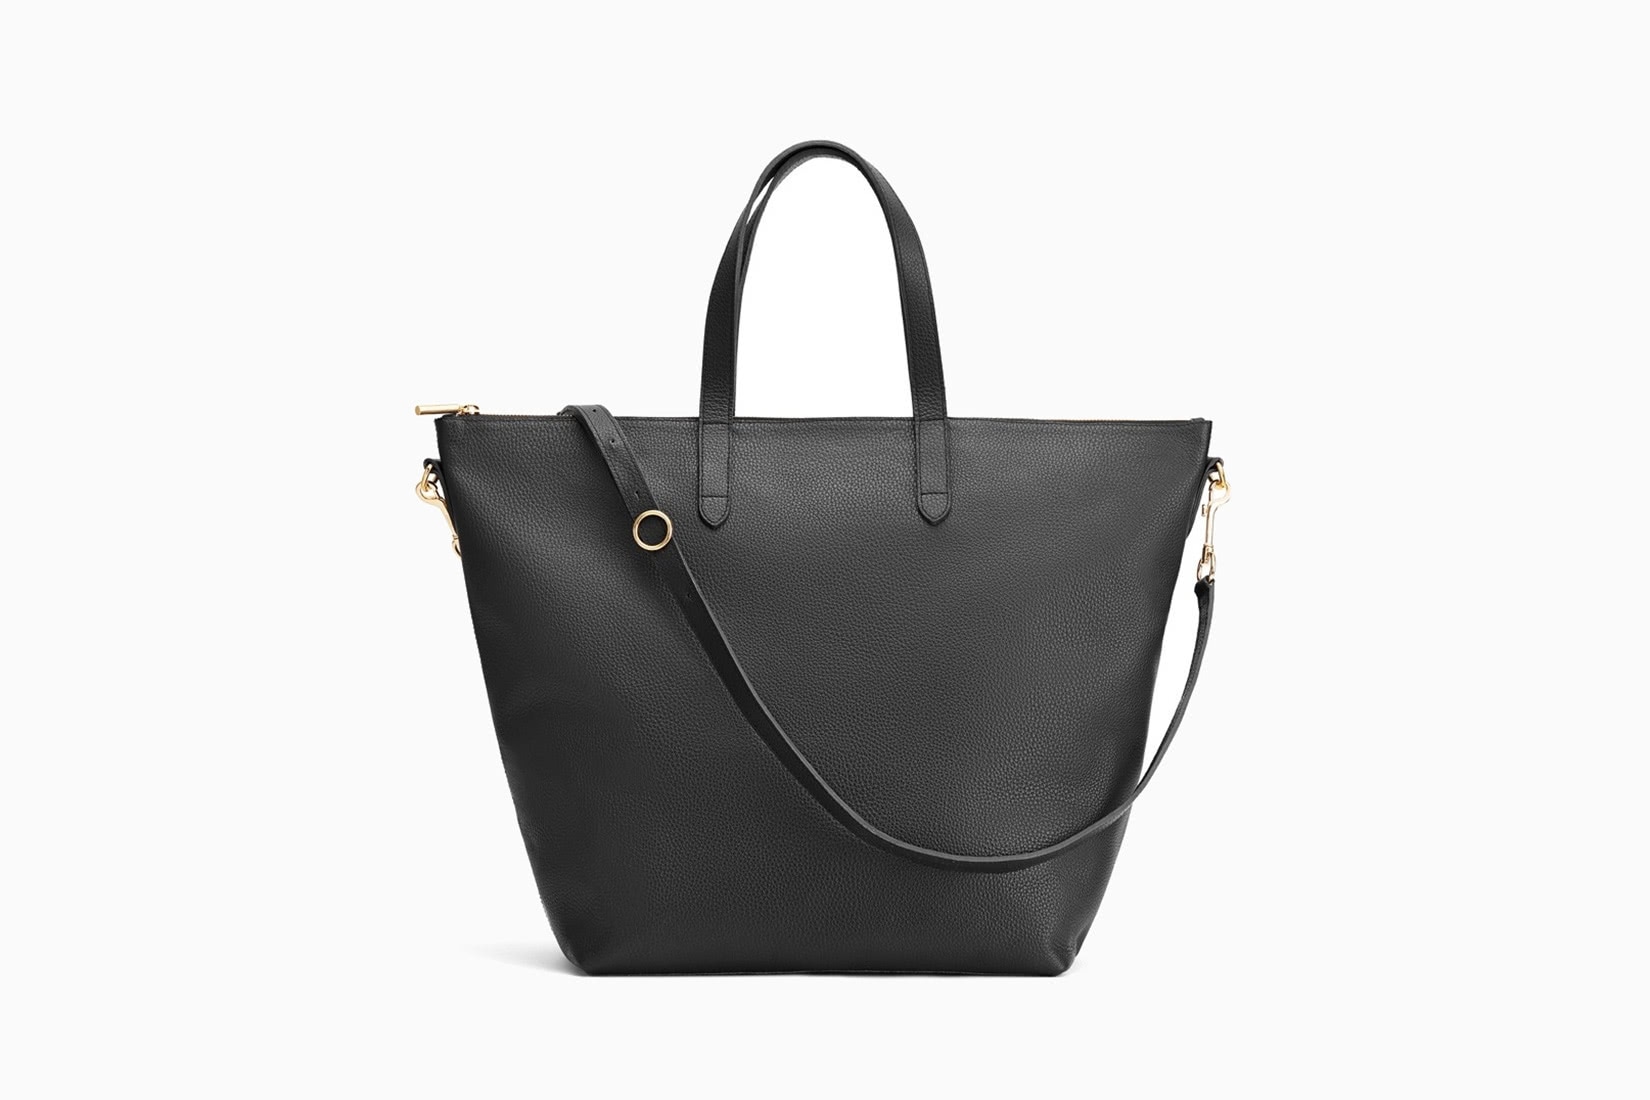 Huge Elegant Leather Bag Urban Style Tote Dark Grey Color